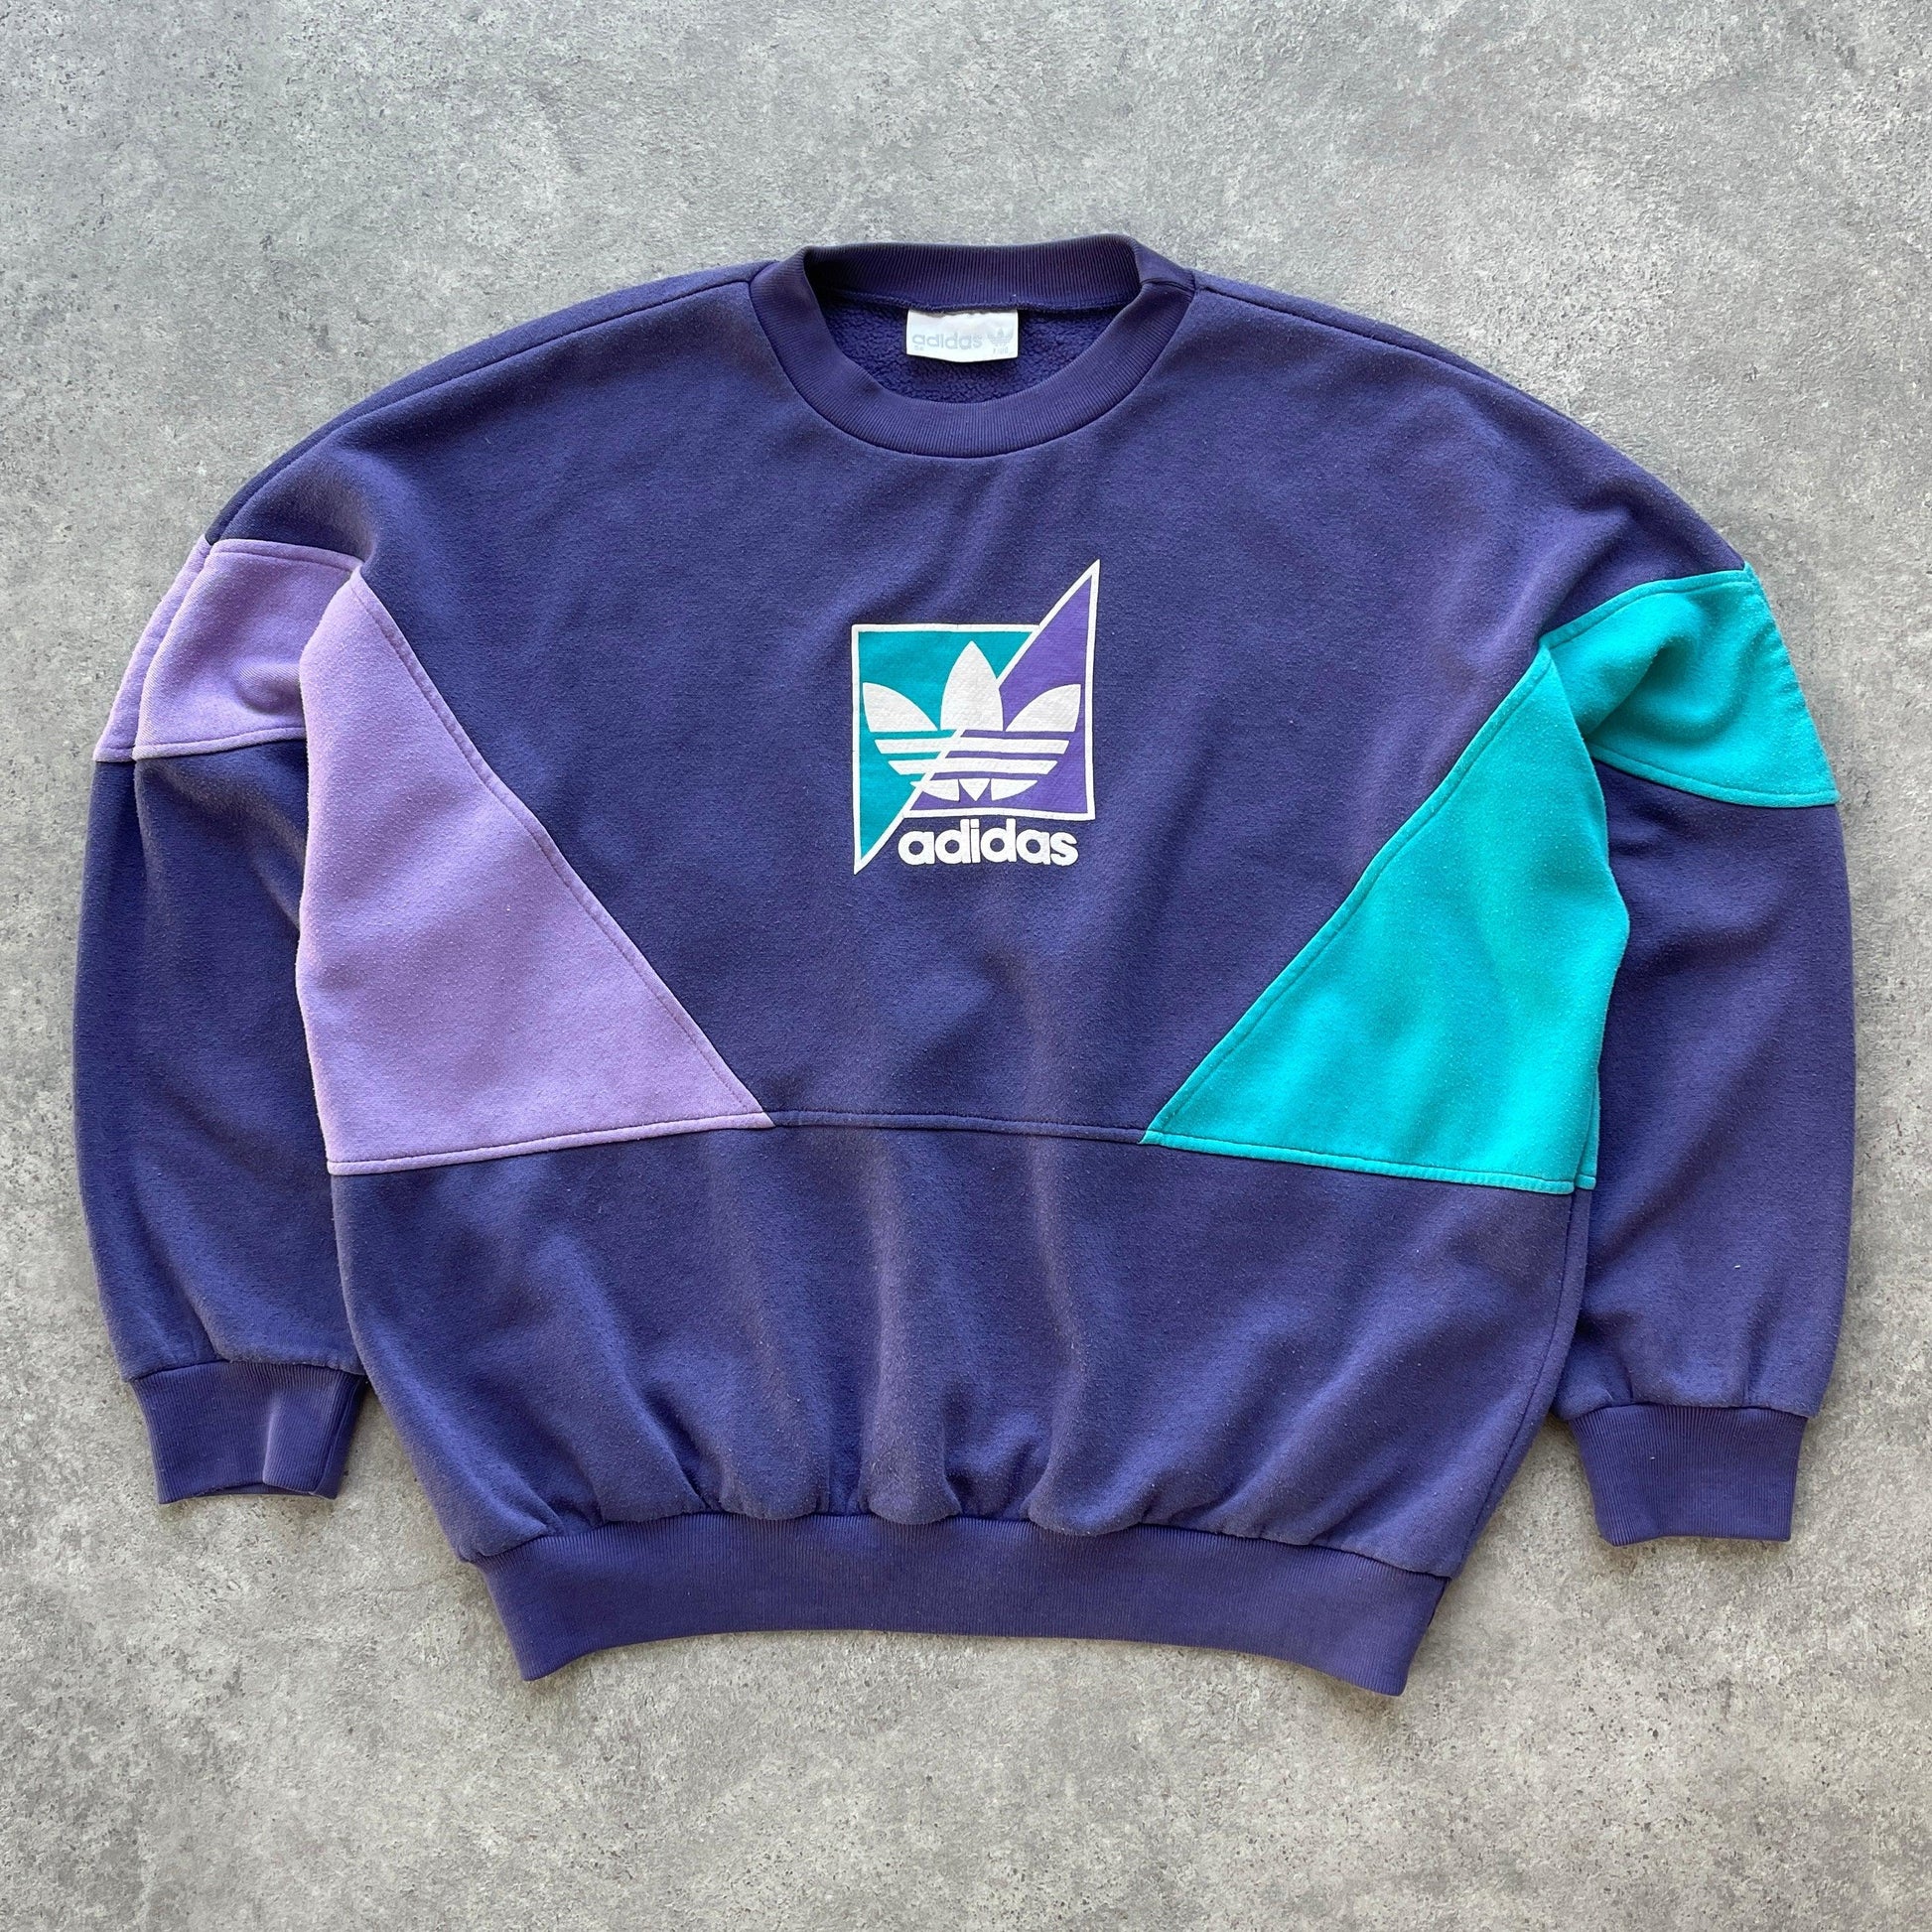 Adidas 1990s colour block graphic sweatshirt (L) - Known Source